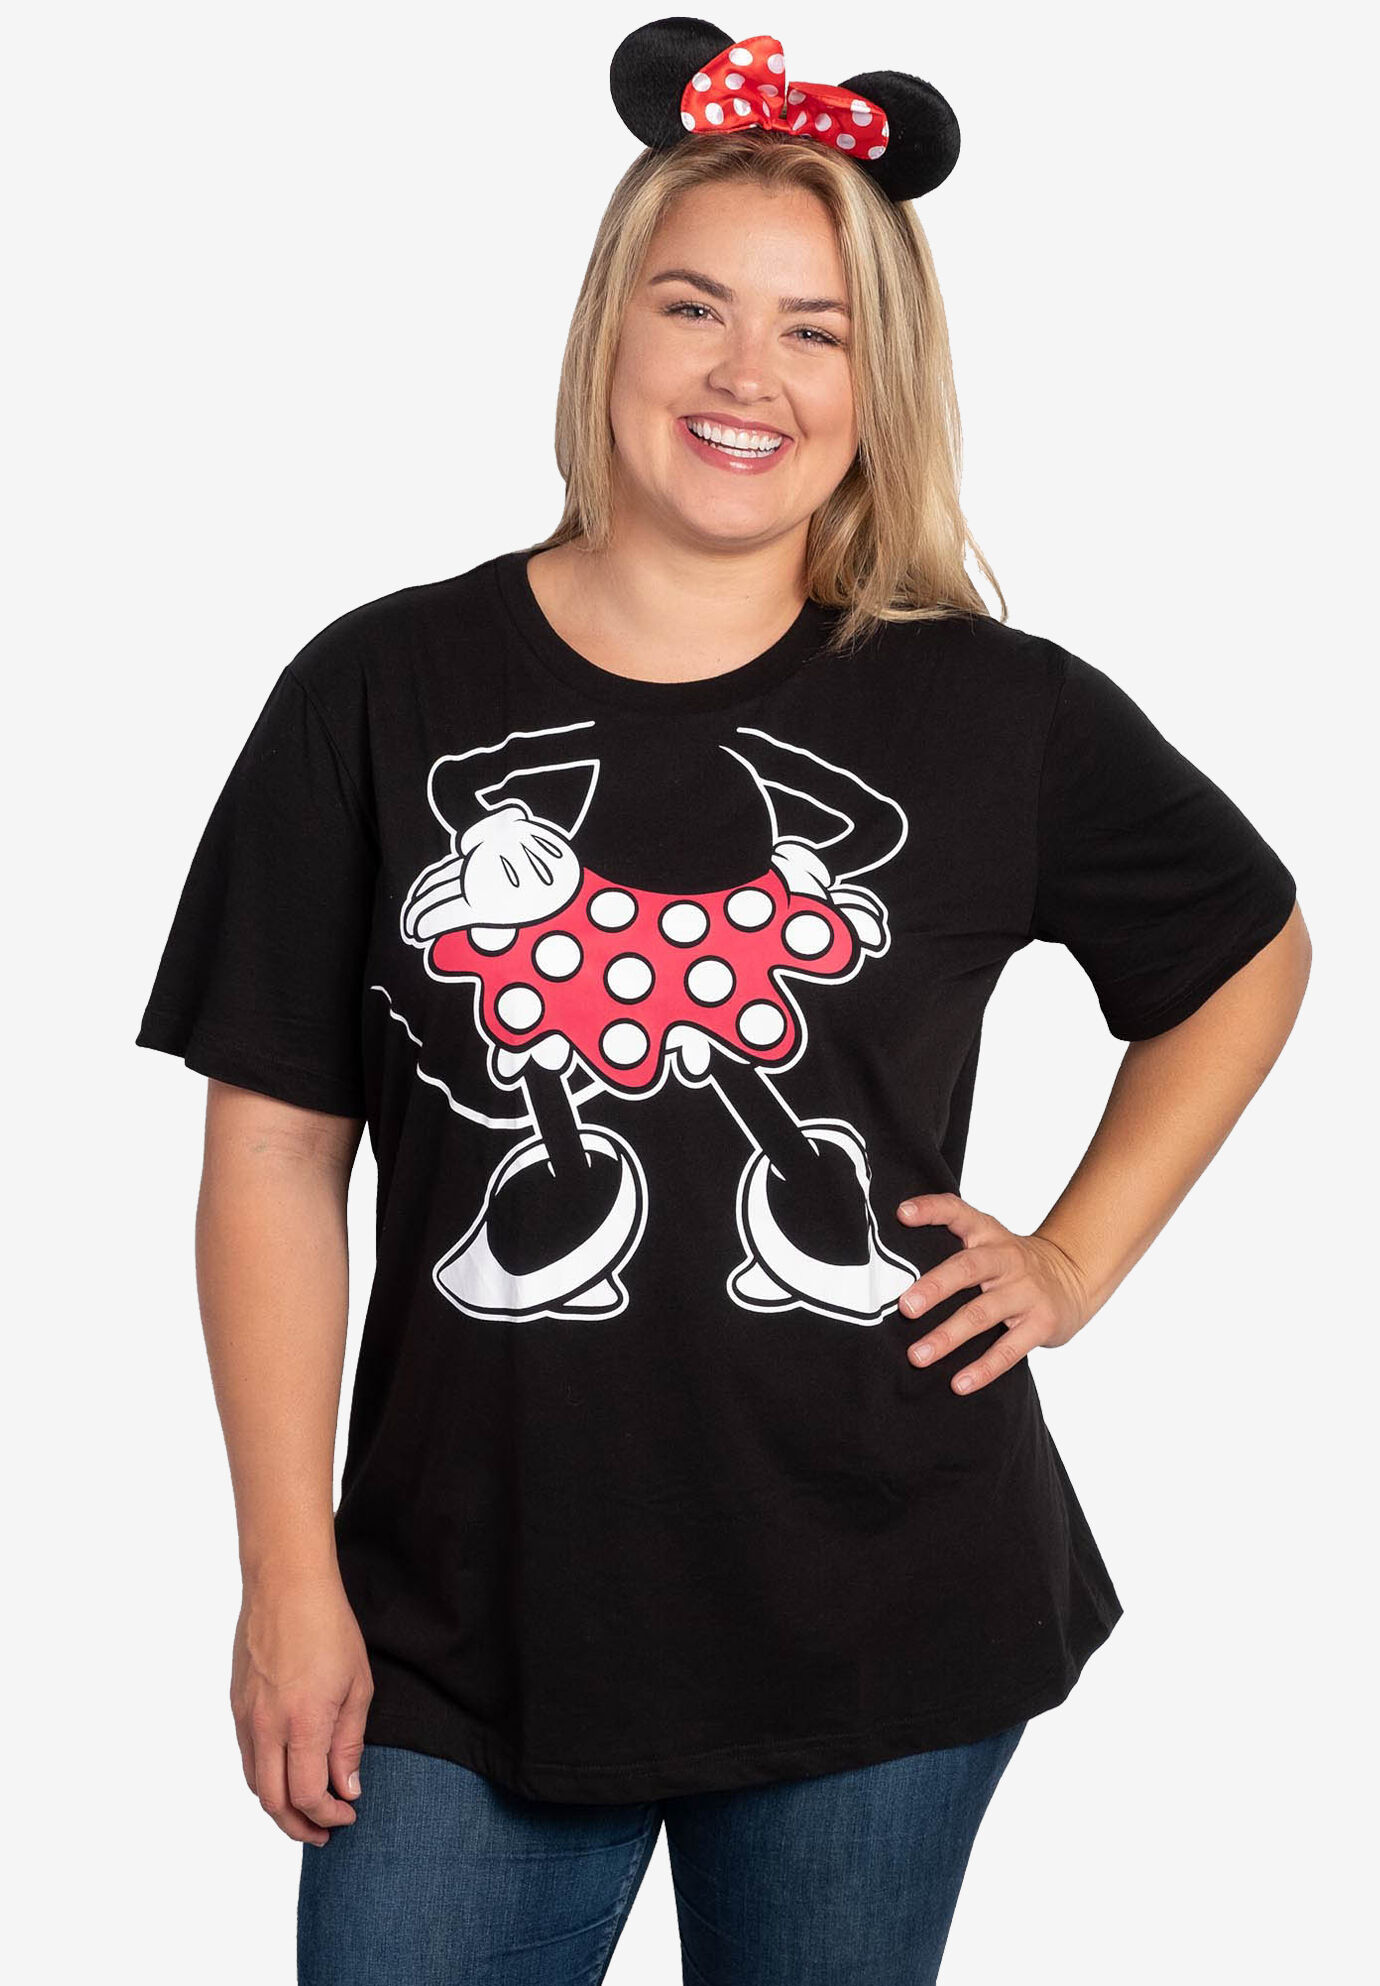 Minnie Mouse Costume T-Shirt & Ears w/Bow 2-Pcs Set